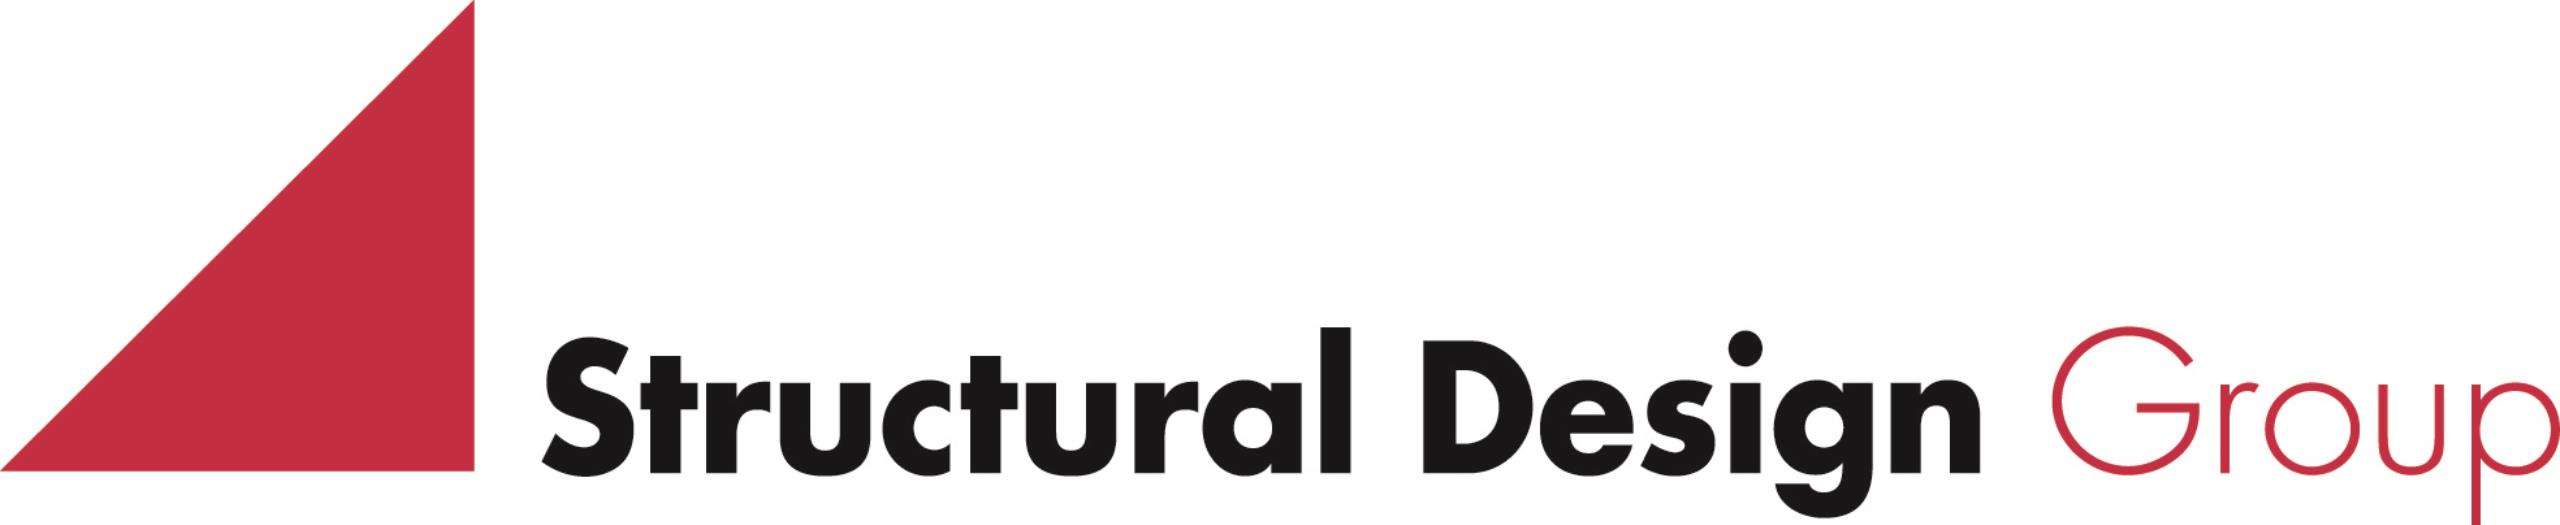 Structural Design Group Logo